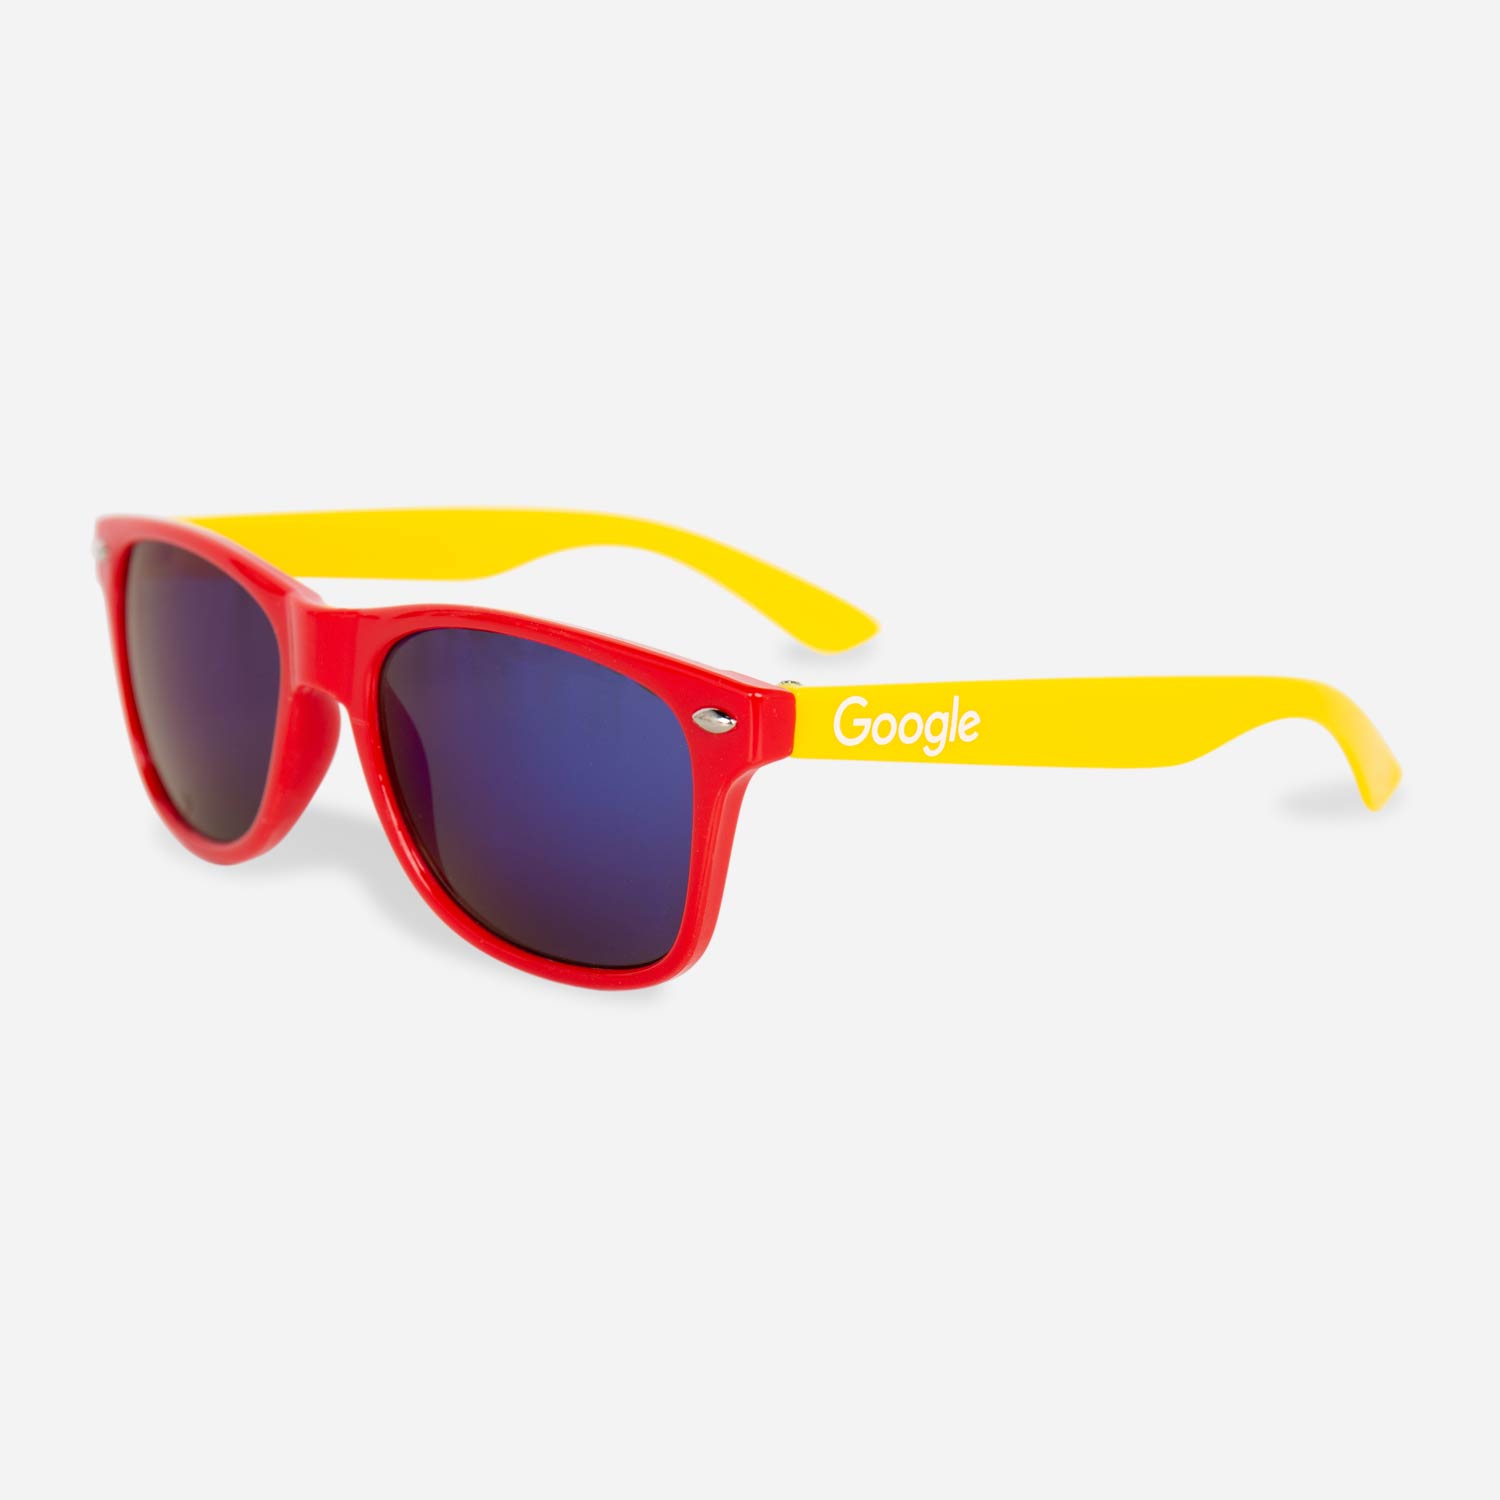 Google Red Kids Sunglasses